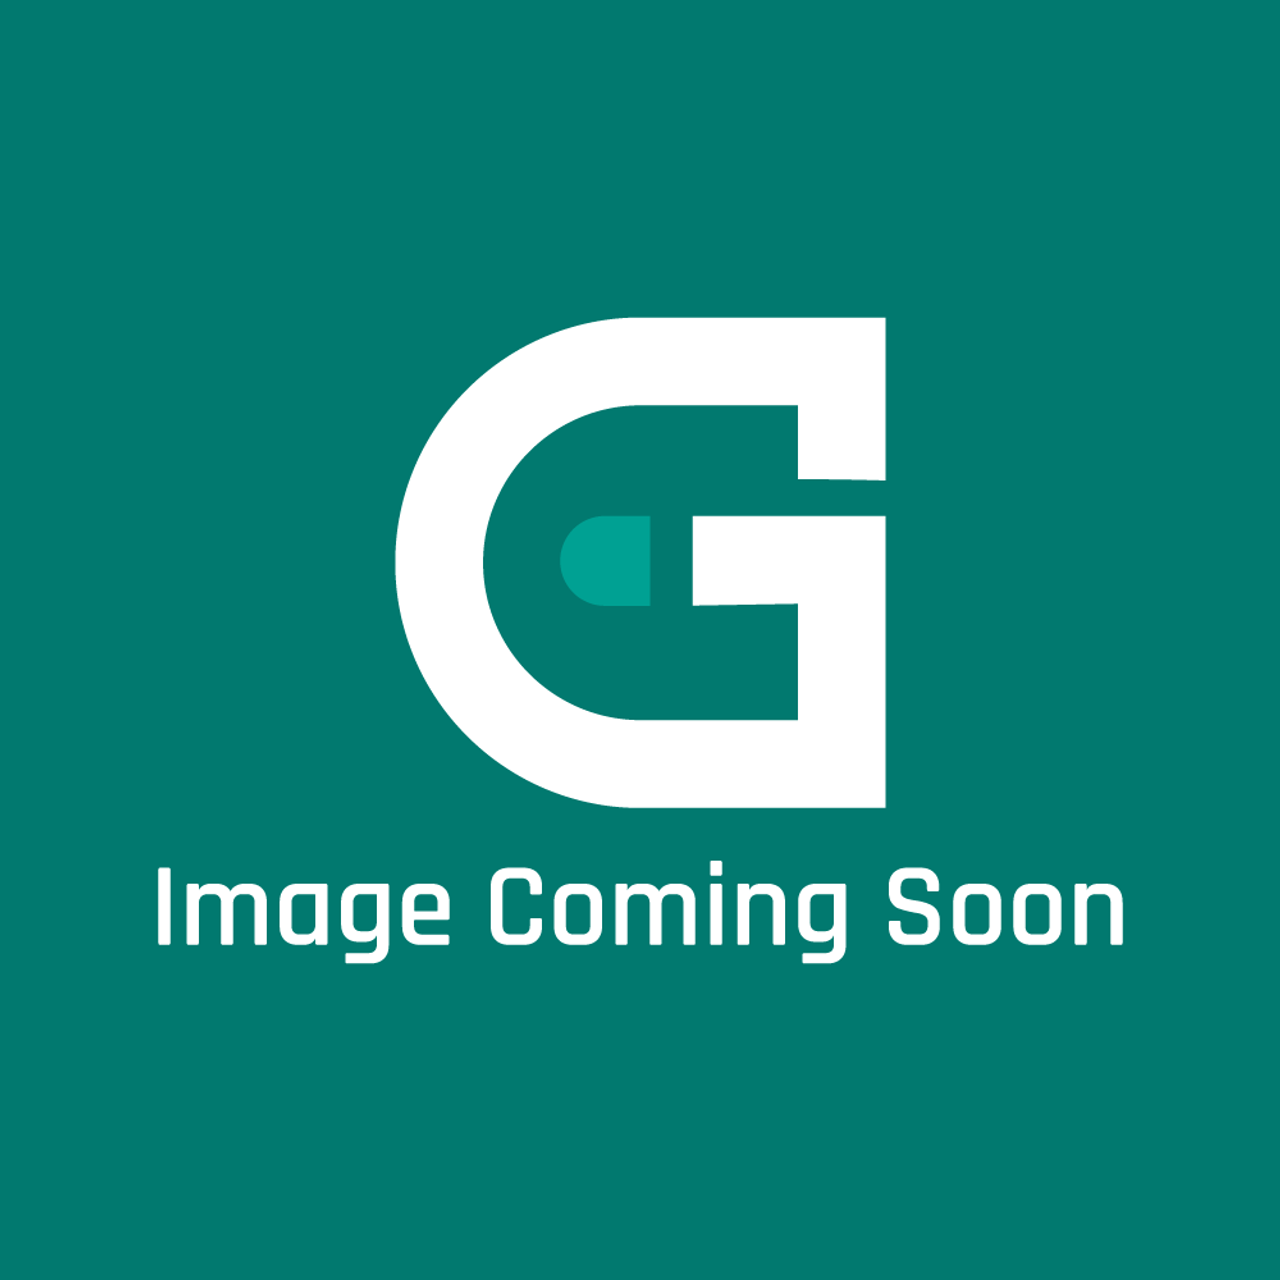 LG 6318L15014B - CDT,Bare - Image Coming Soon!